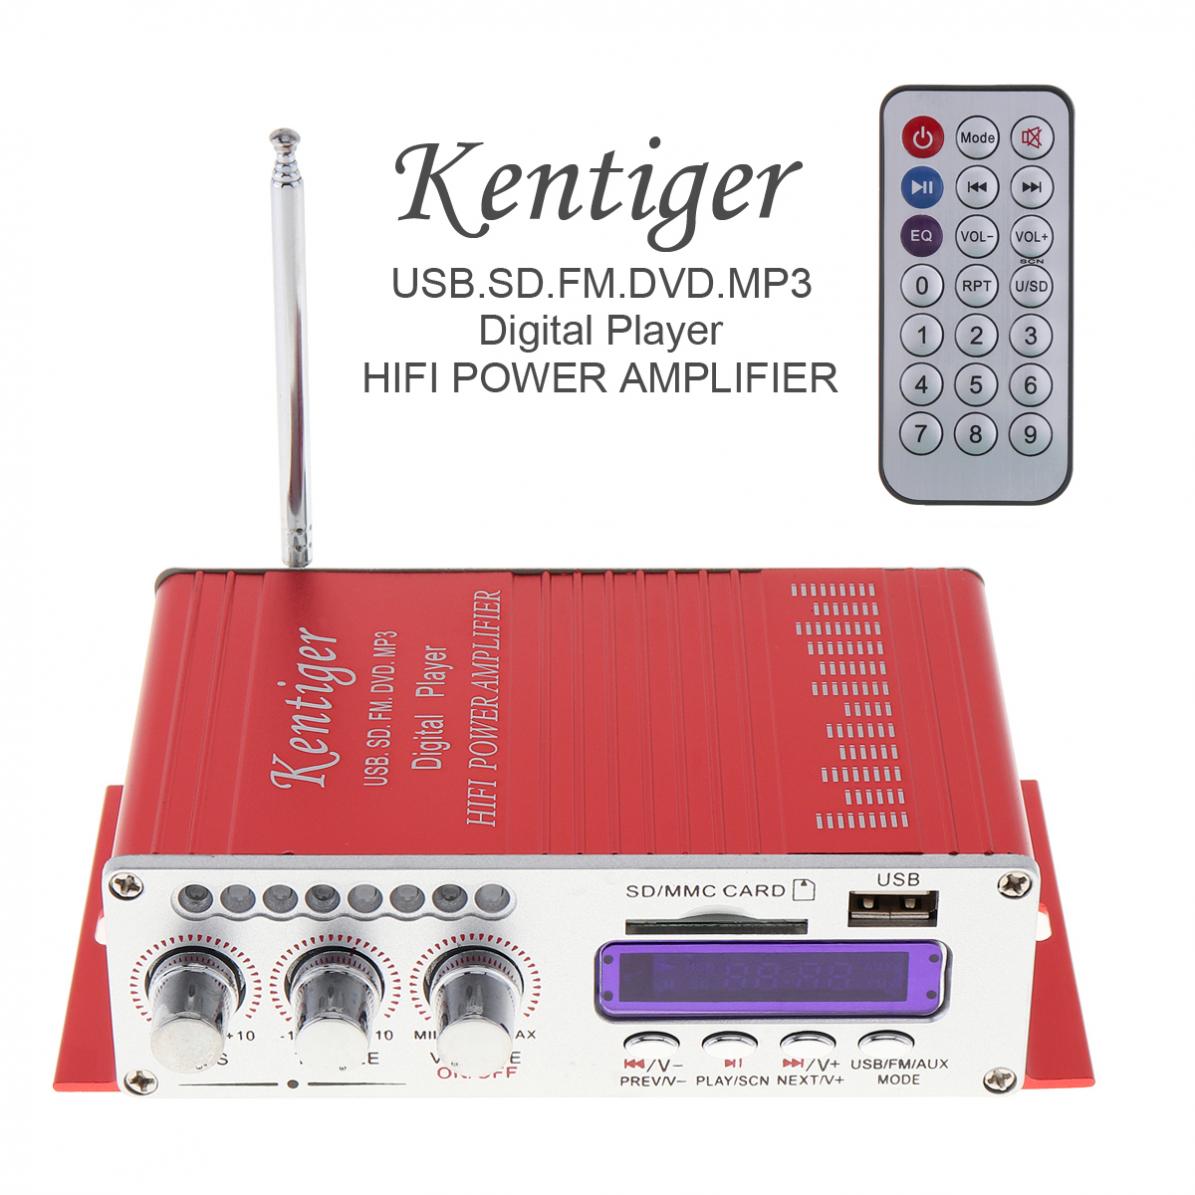 Auto Versterkers 2CH Hi-Fi Digitale Audio Speler Auto Versterker Fm Radio Stereo Speler Ondersteuning Sd/Usb/MP3/dvd Ingang